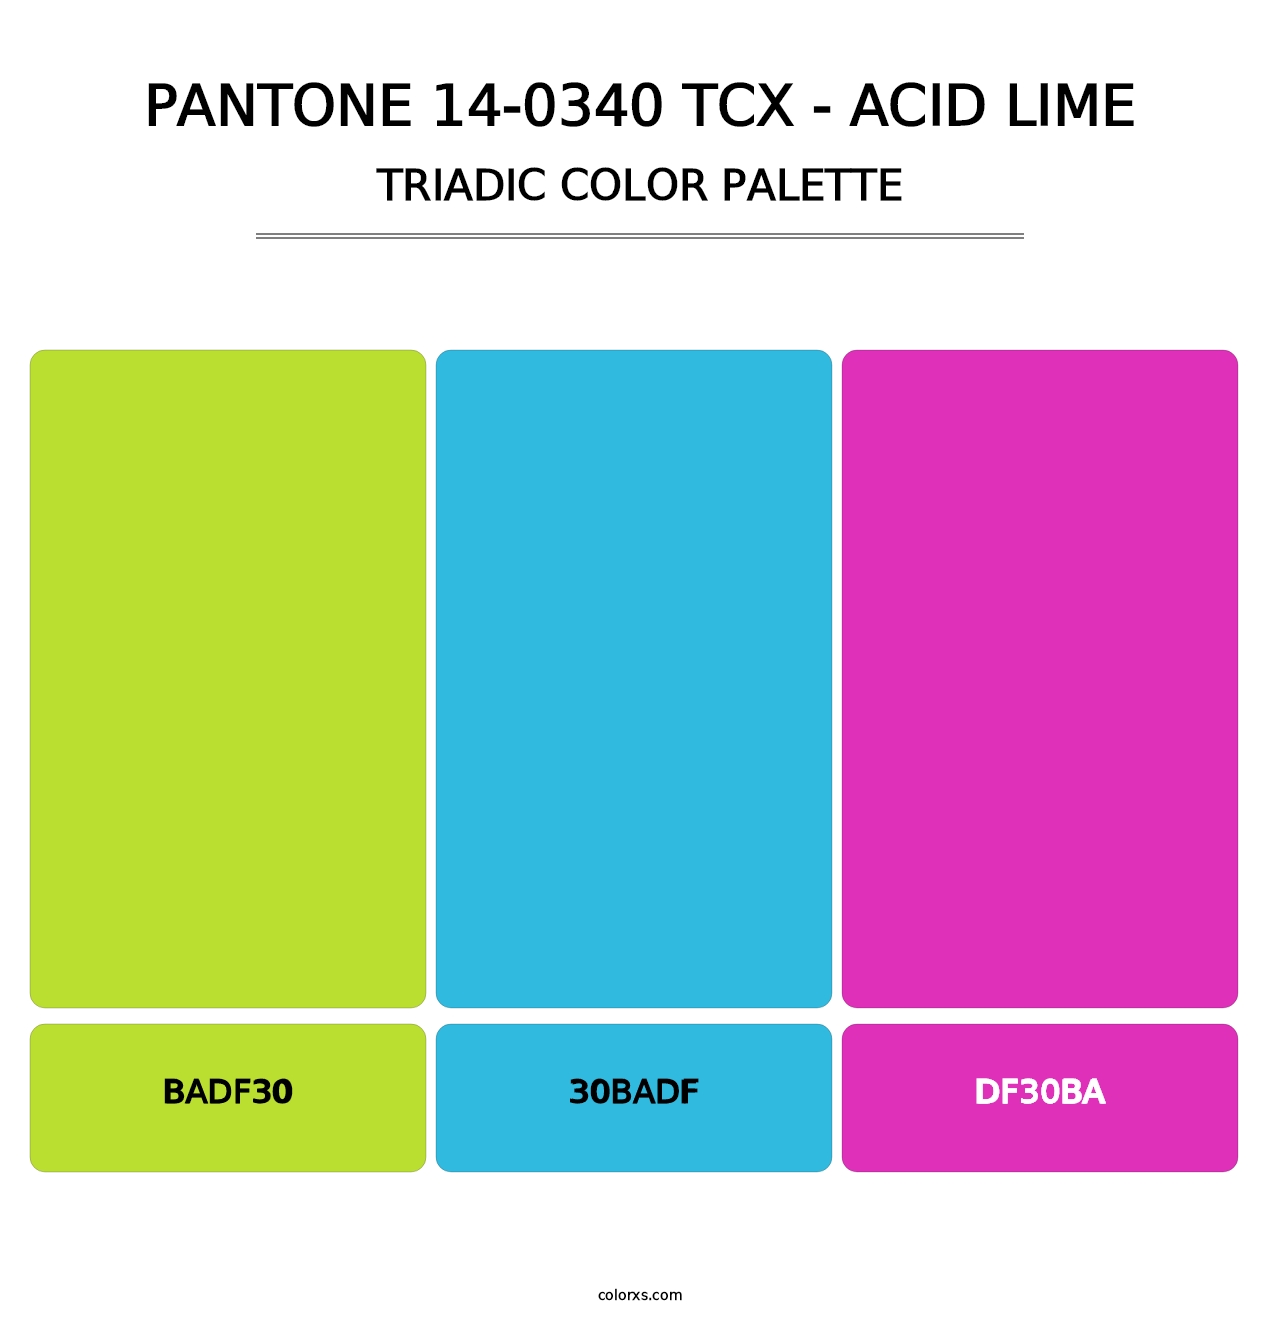 PANTONE 14-0340 TCX - Acid Lime - Triadic Color Palette